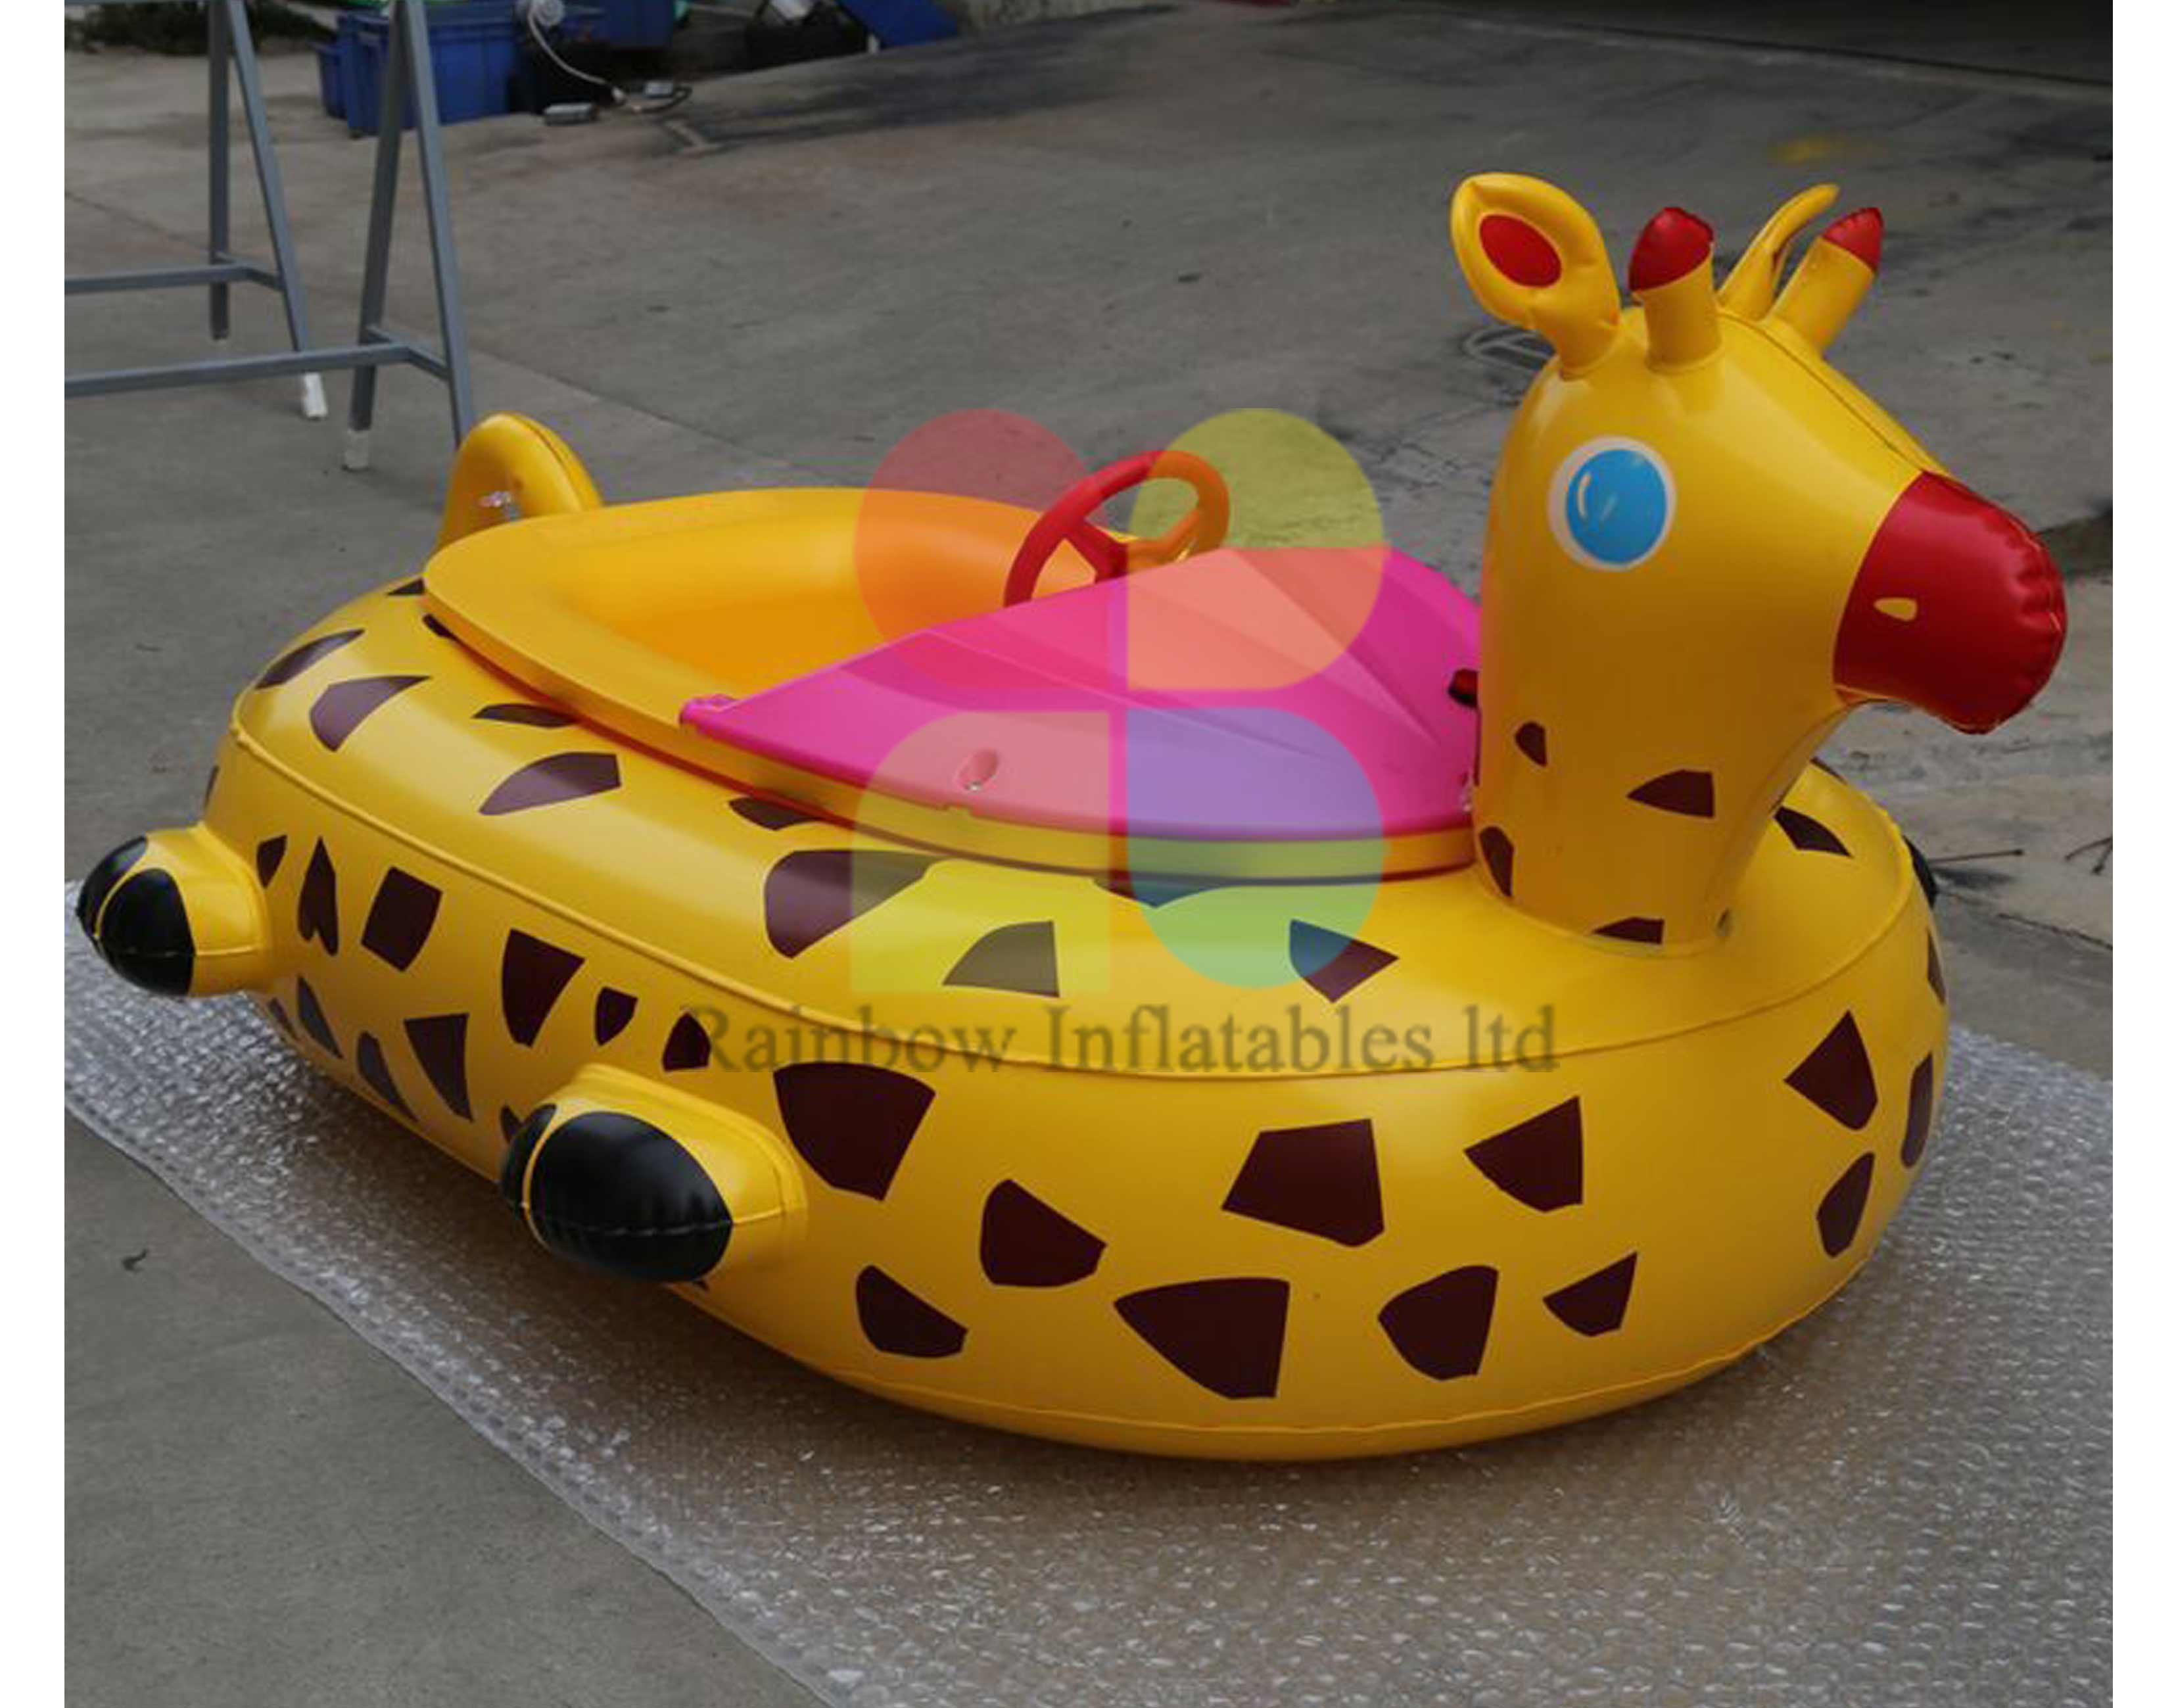 Yellow Giraffe bumper boat with remote control for kids